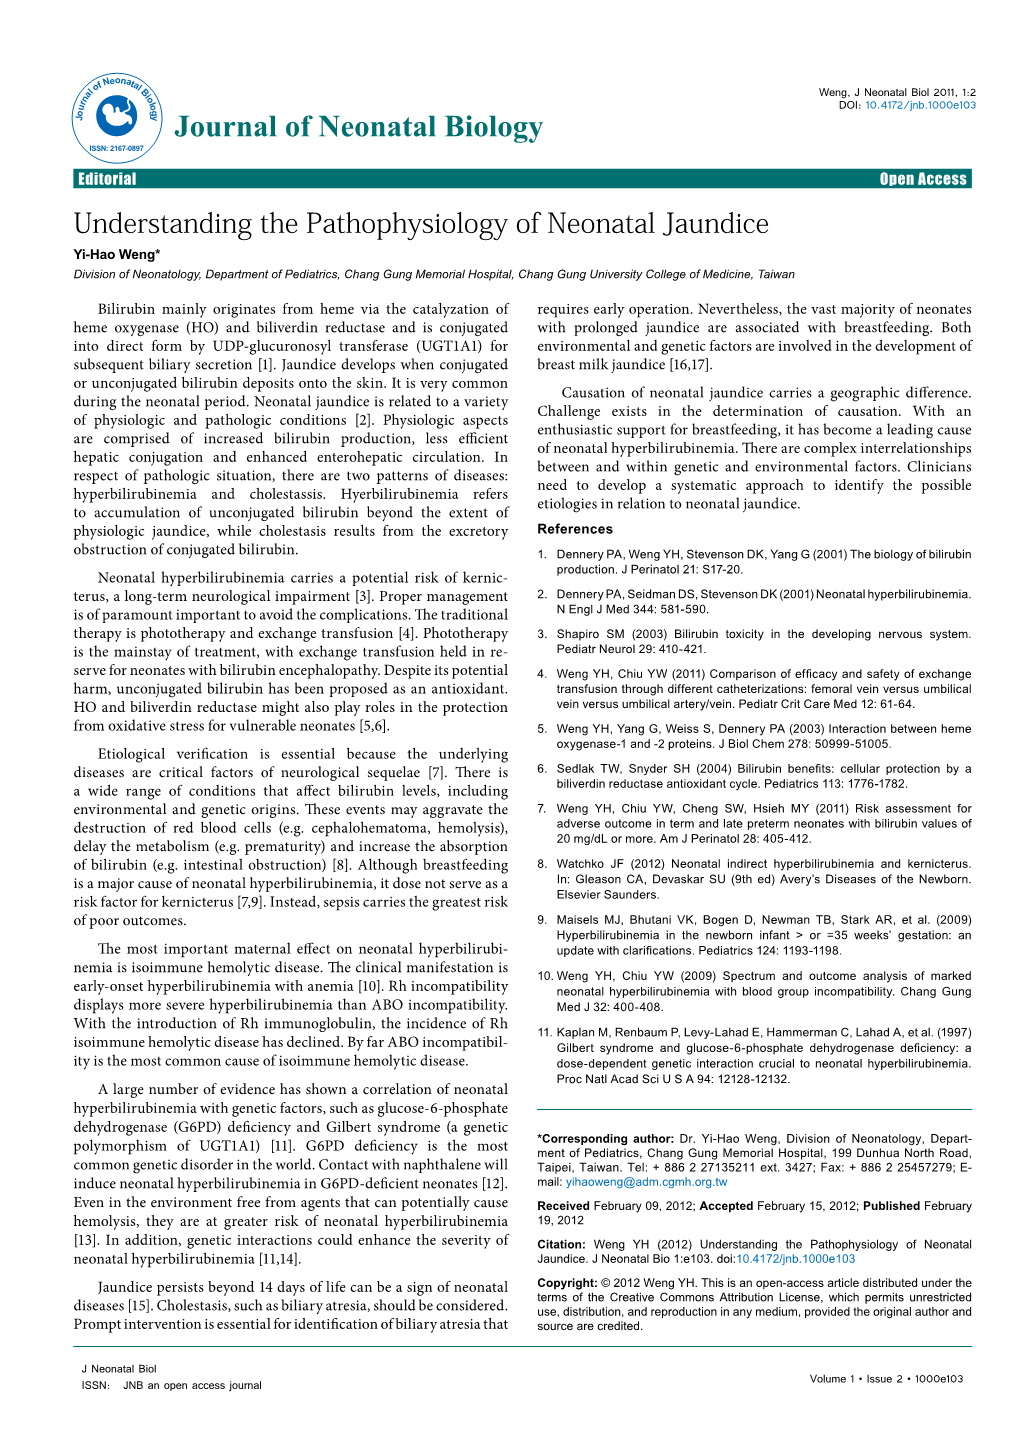 Understanding the Pathophysiology of Neonatal Jaundice